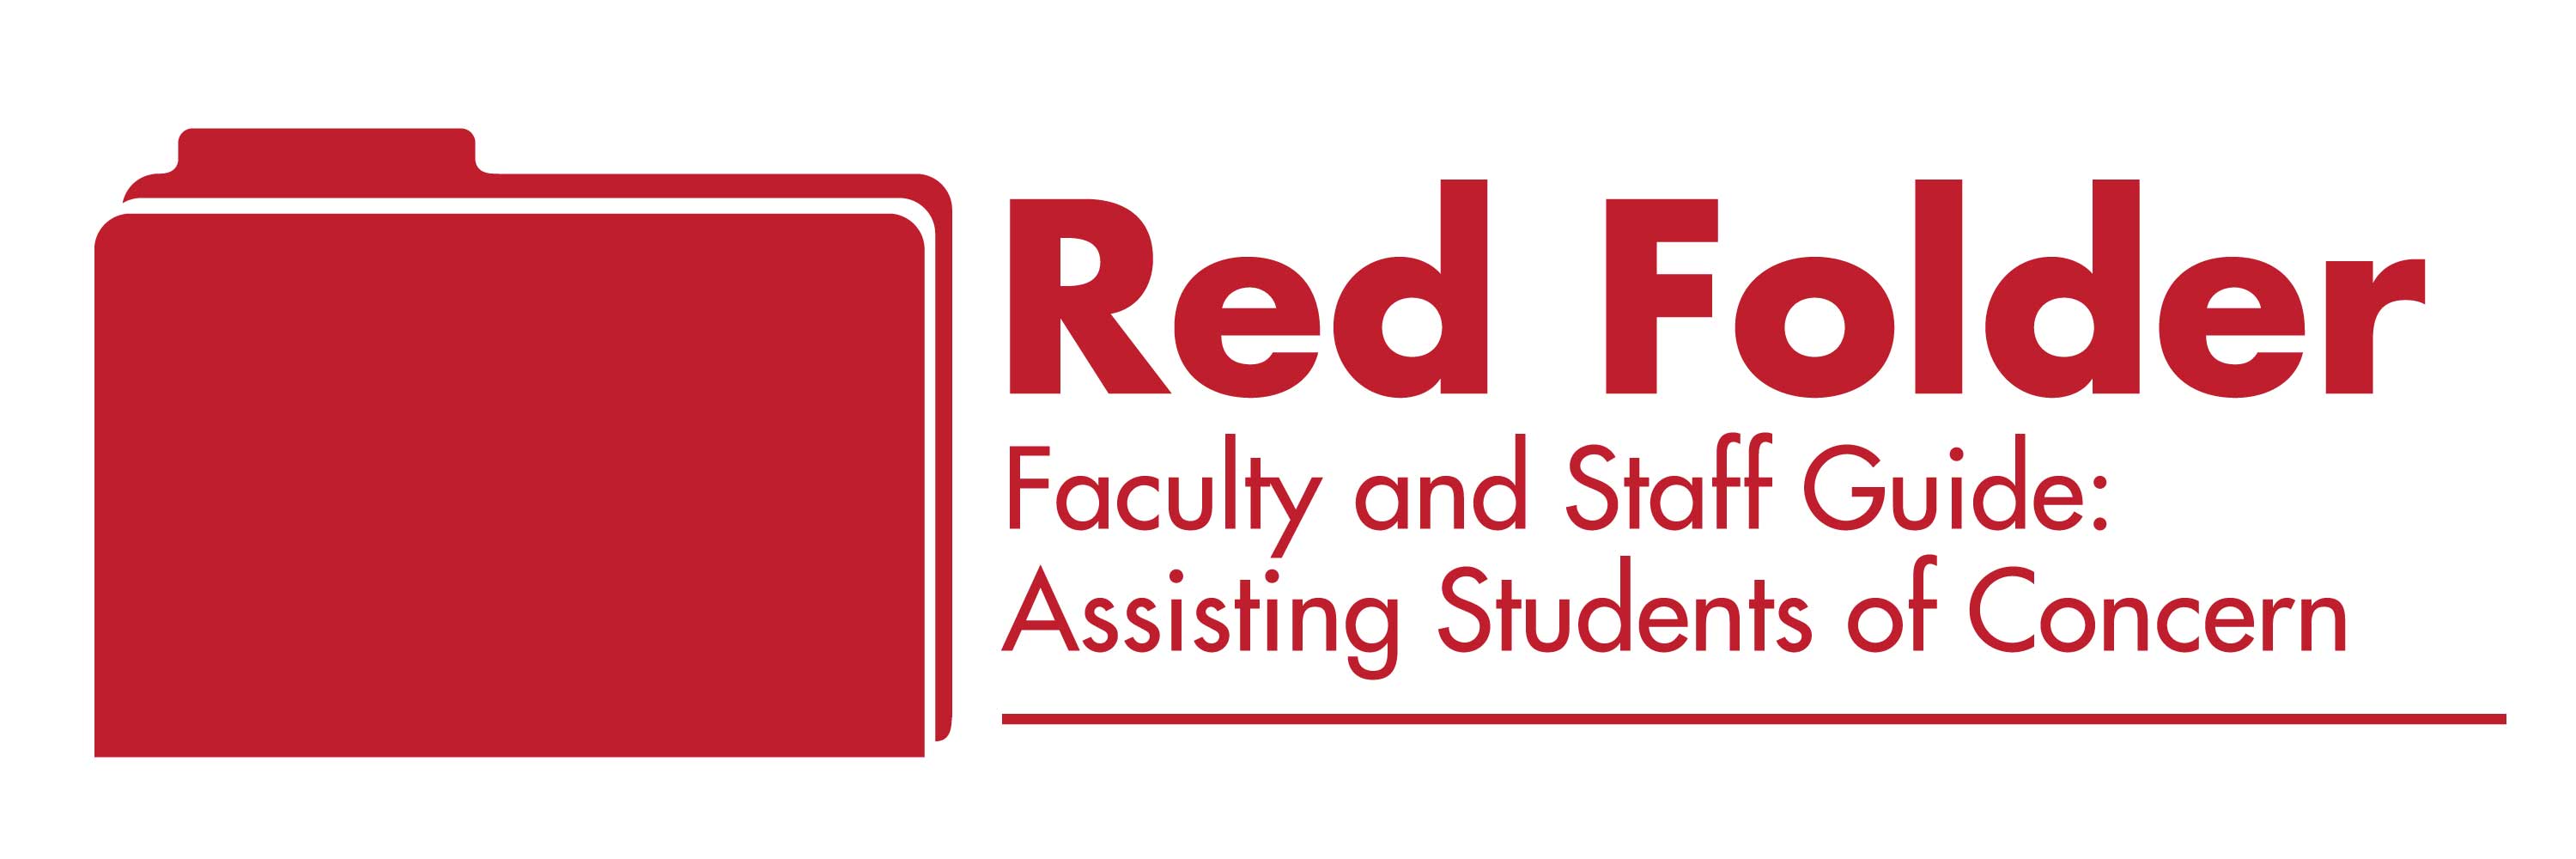 red folder logo